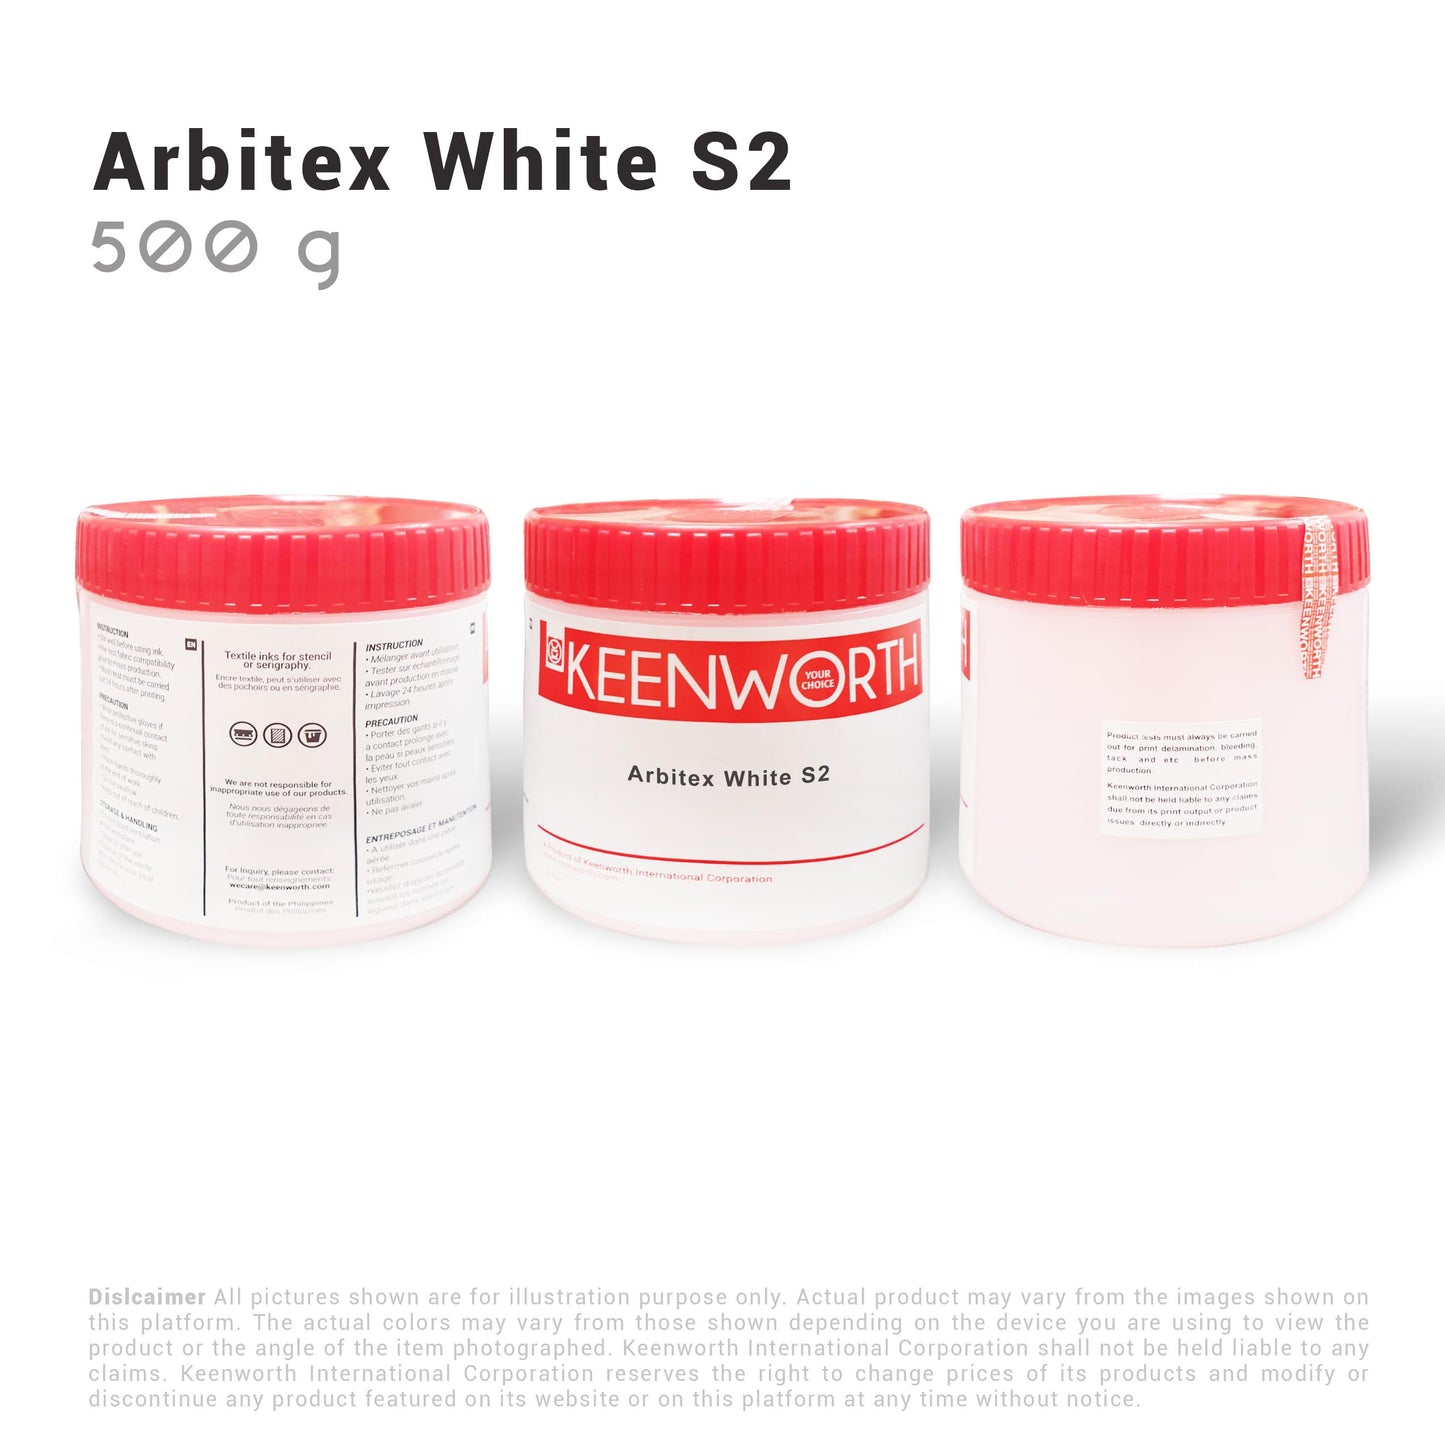 Arbitex Blanc S2